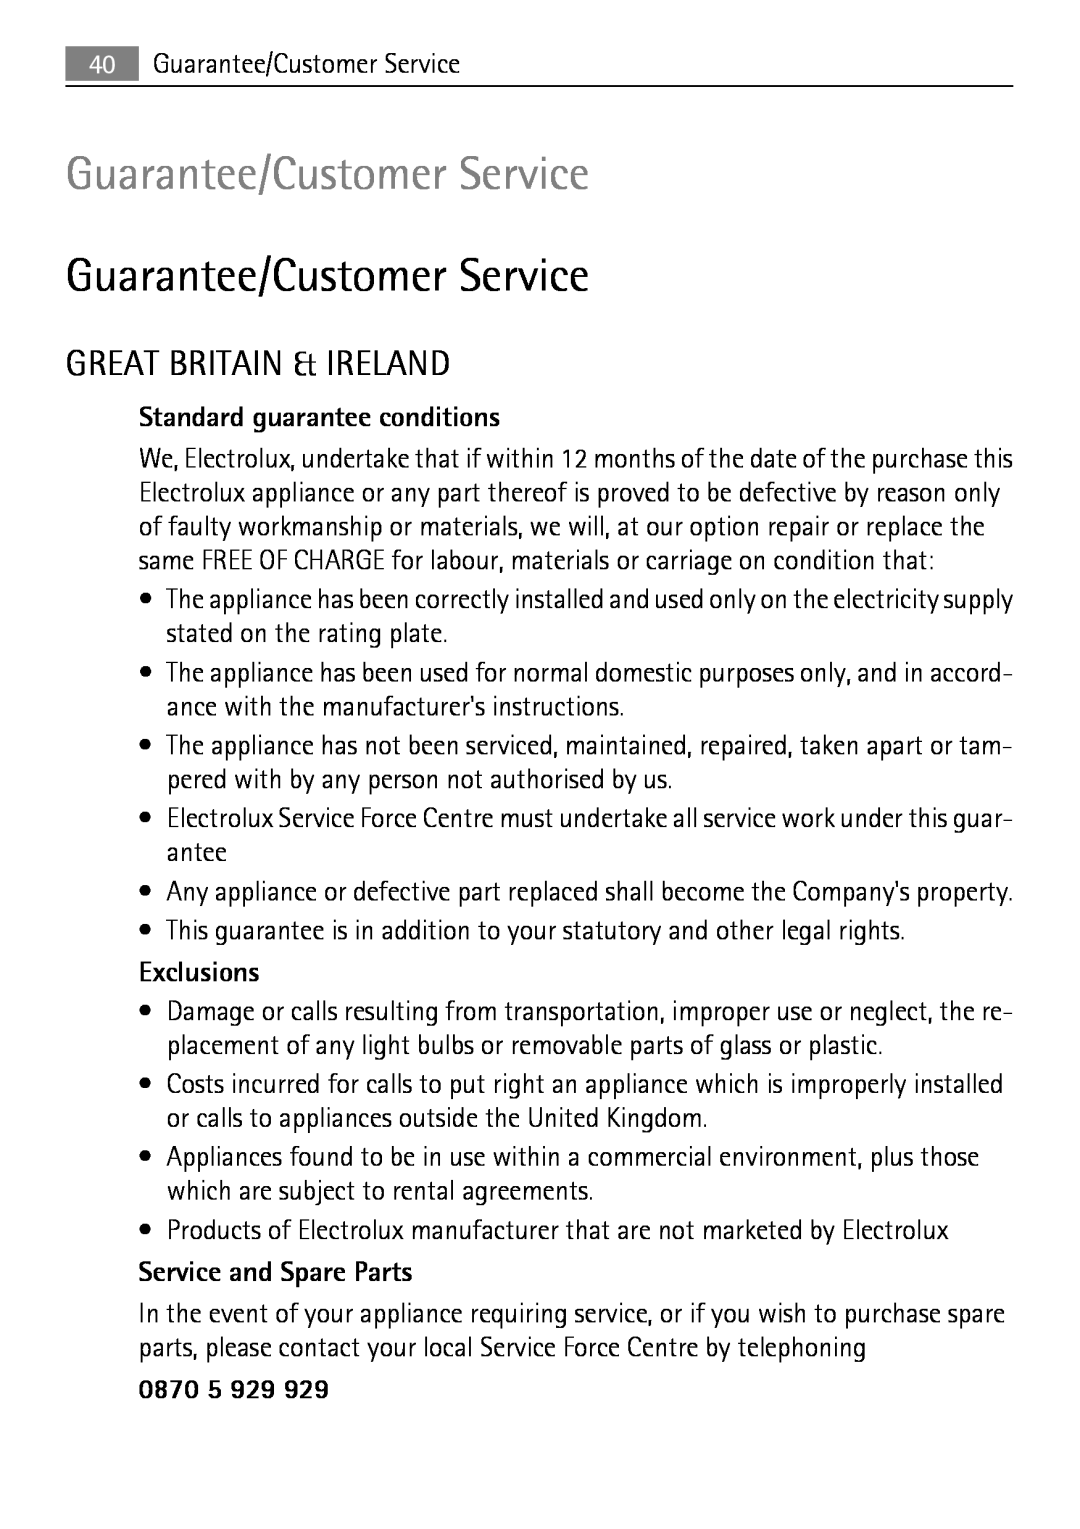 Electrolux 50870 user manual Guarantee/Customer Service, Great Britain & Ireland, Standard guarantee conditions, Exclusions 